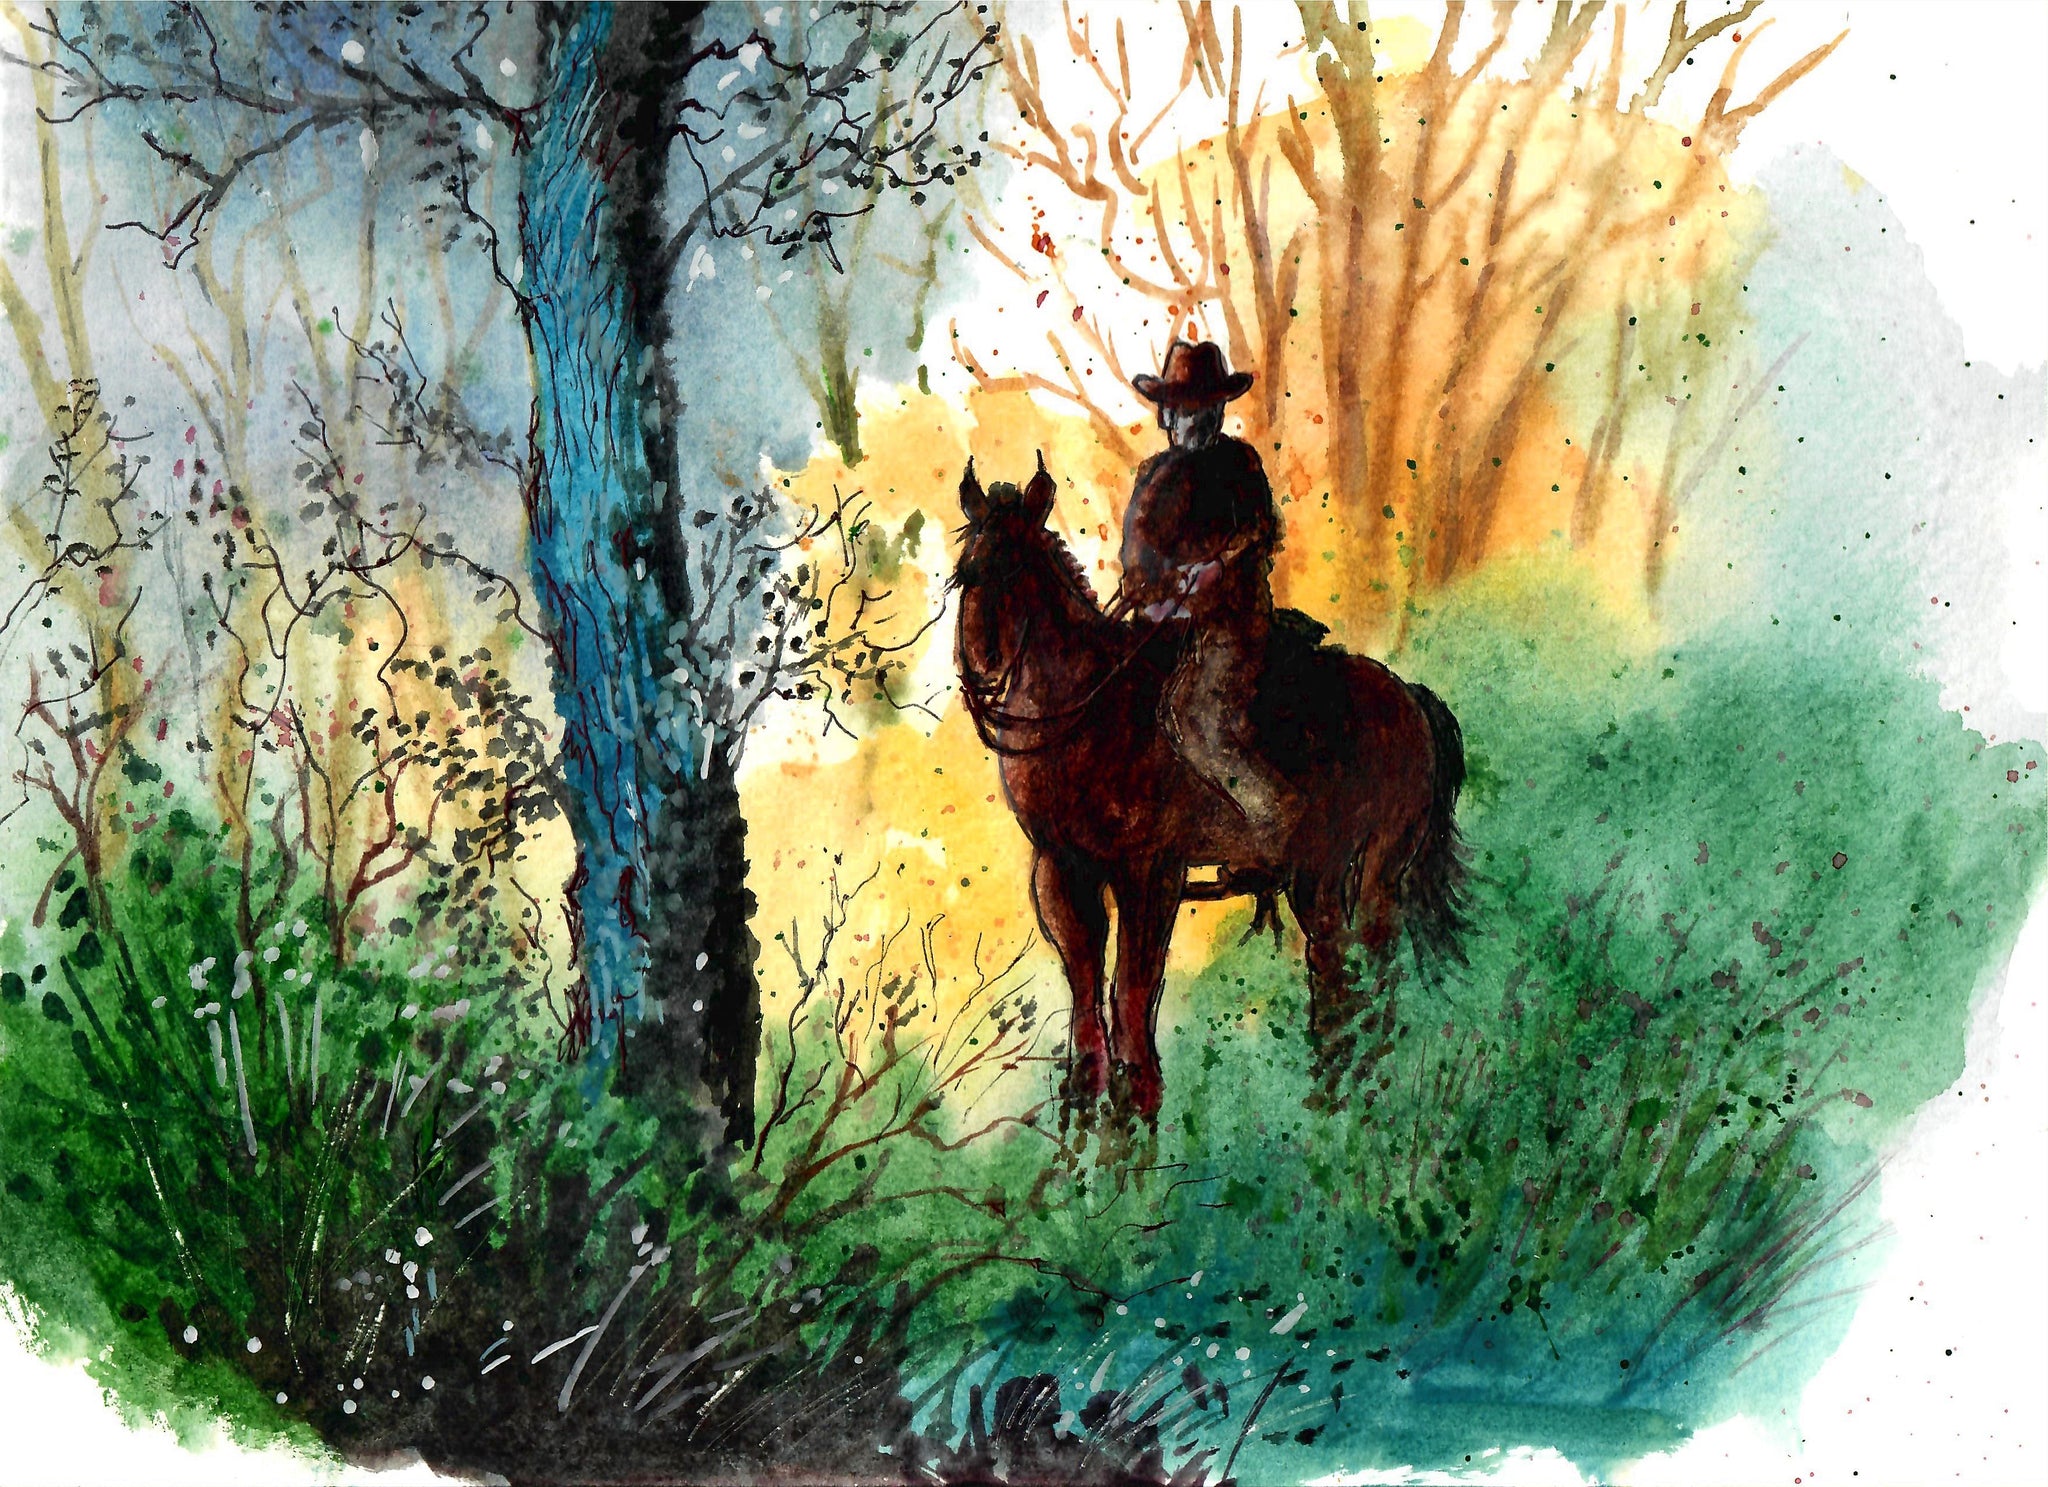 Western - Cowboy And Old Tree, Cowboy Art, Western Wall Decor, Cowboy In A Forest Art